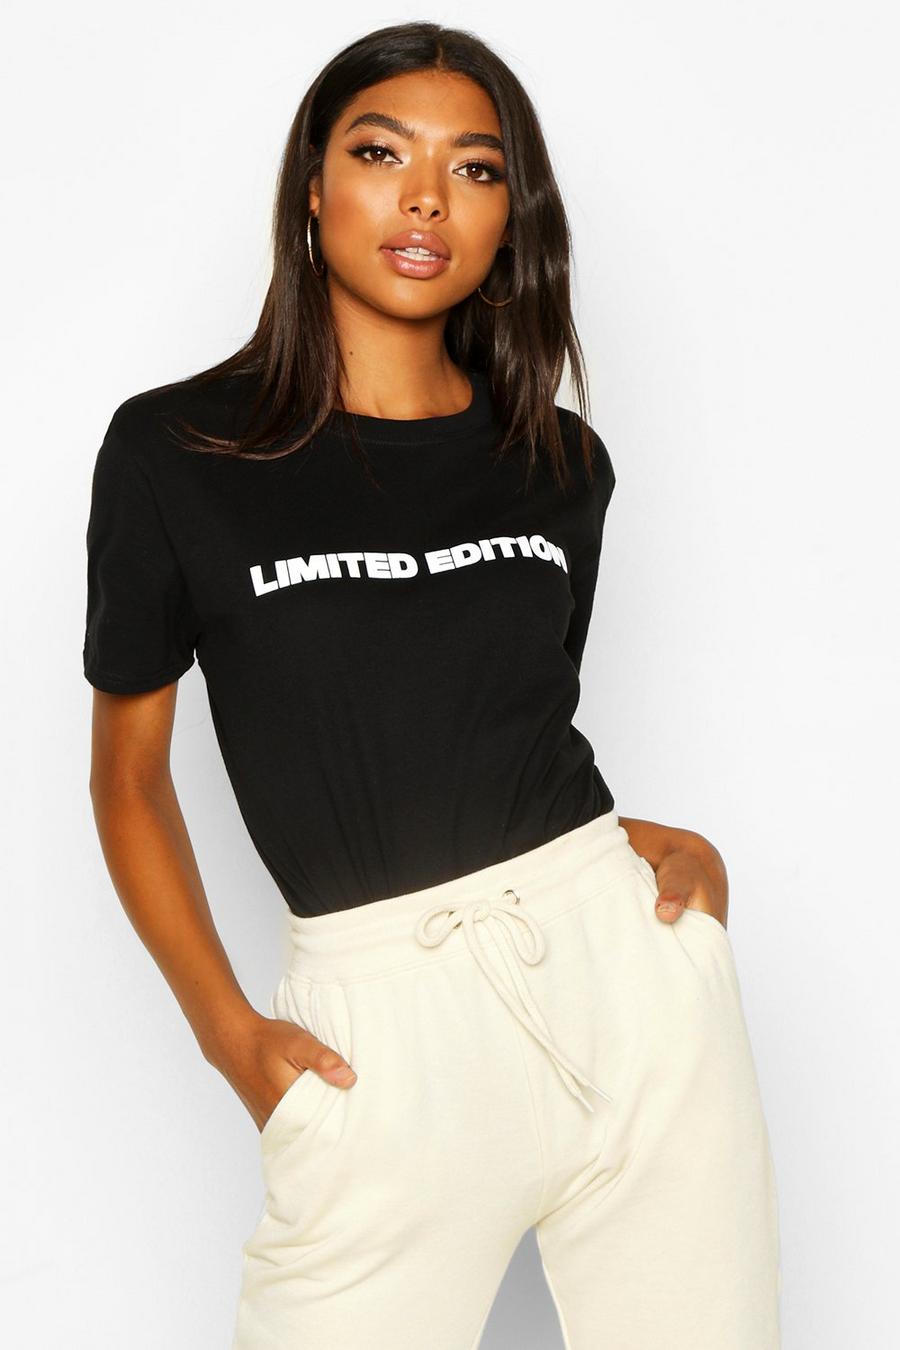 Camiseta con eslogan "Limited Edition" image number 1